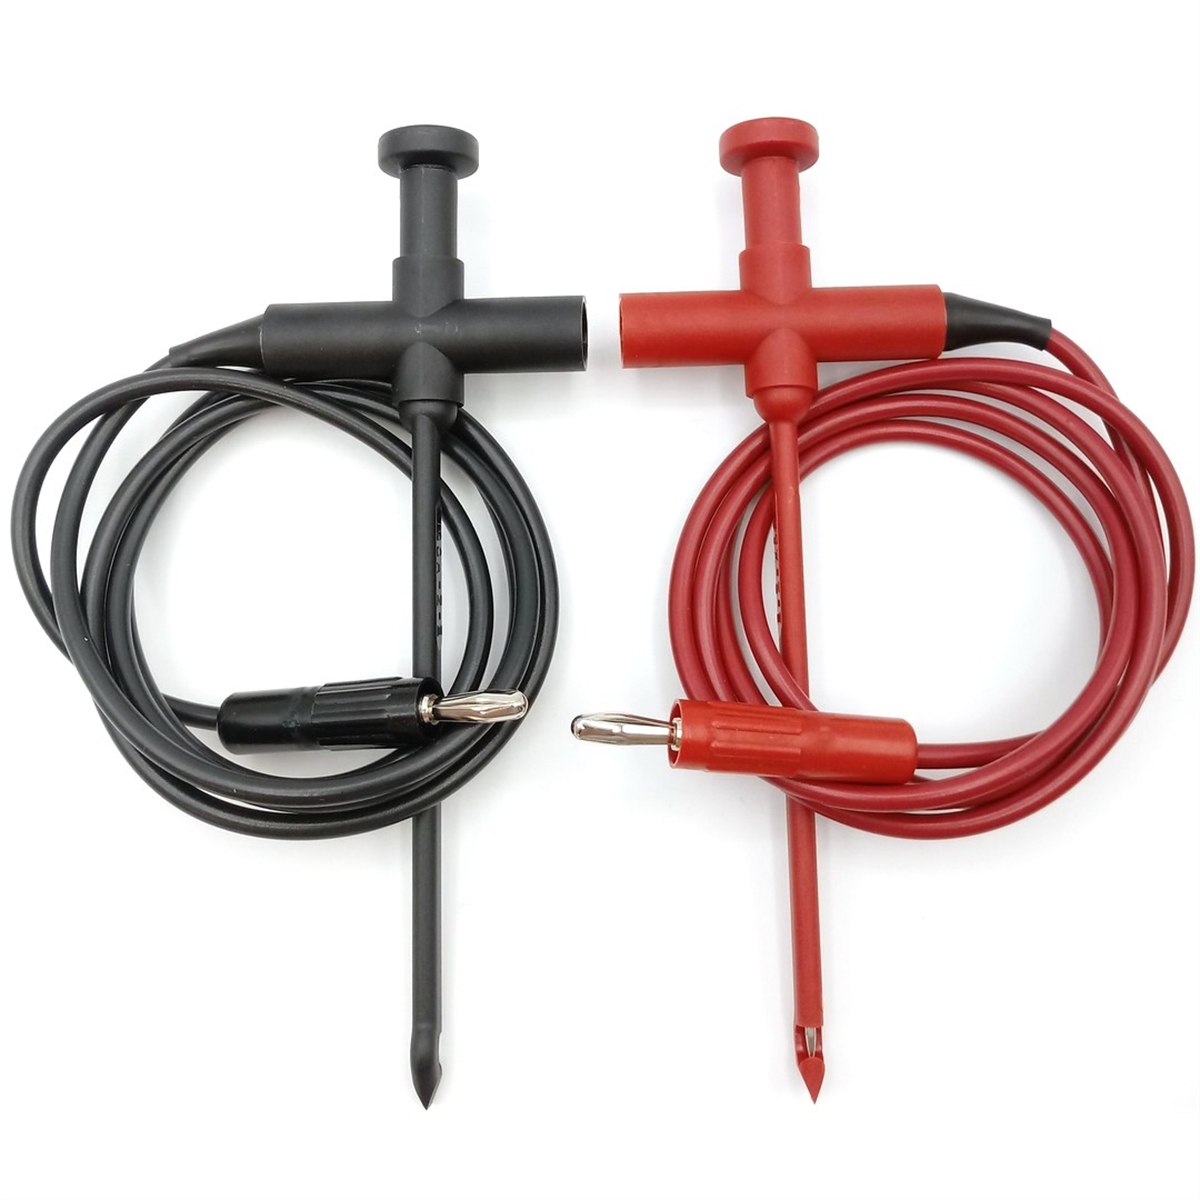 Banana Plug Insulation Piercing Test Hook - Red /